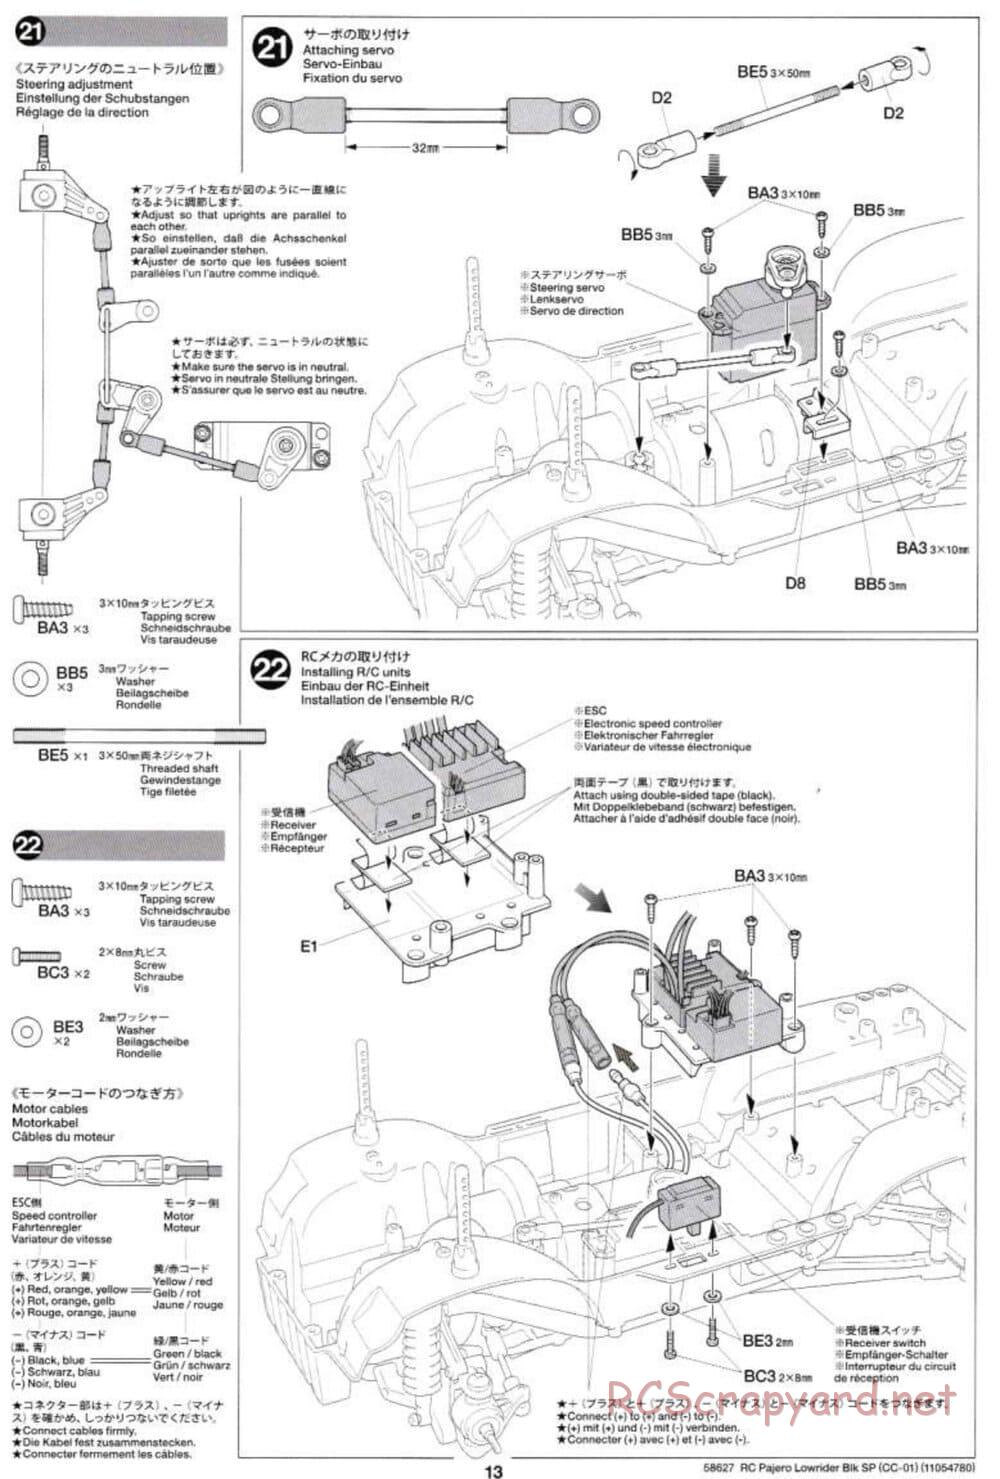 Tamiya - Mitsubishi Pajero Custom Lowrider Black Special - CC-01 Chassis - Manual - Page 13